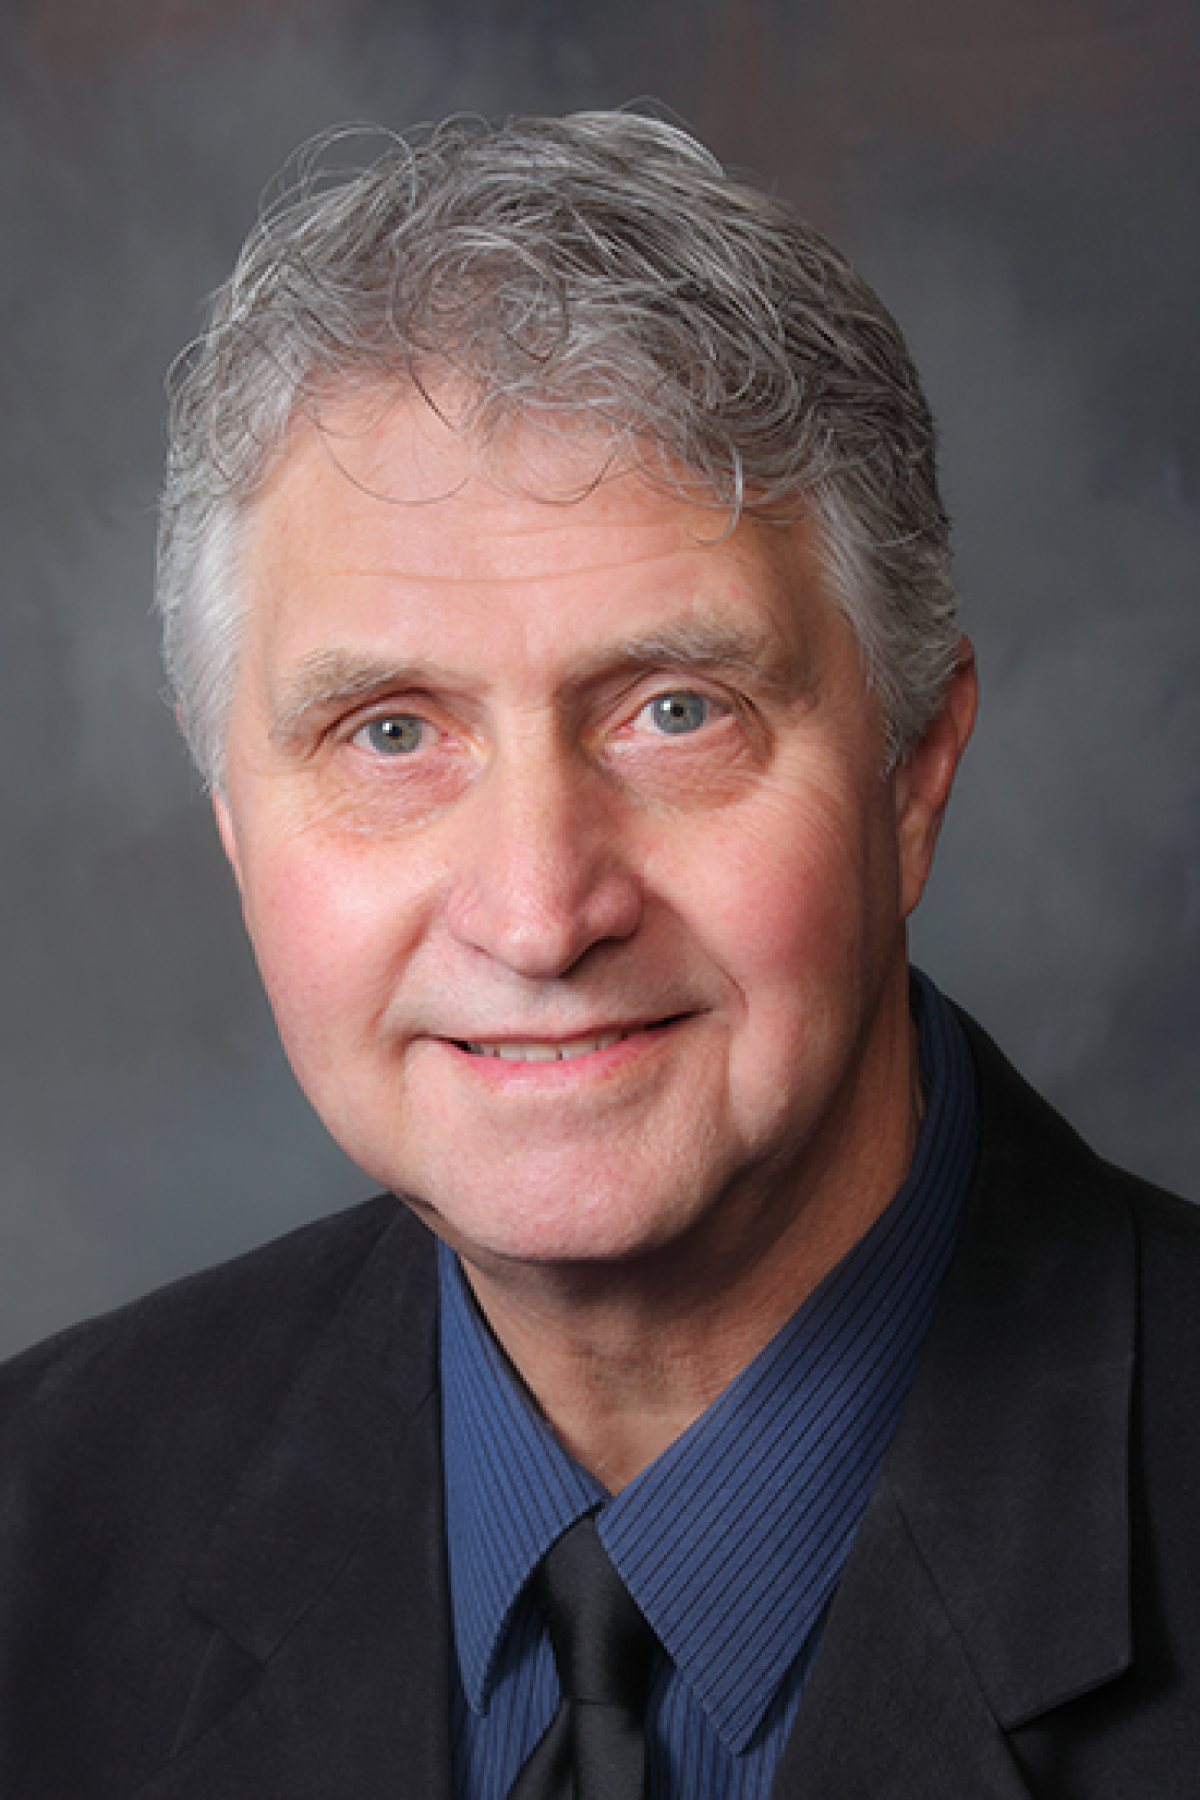 Dr. John Hart wearing suit and dark blue shirt - headshot